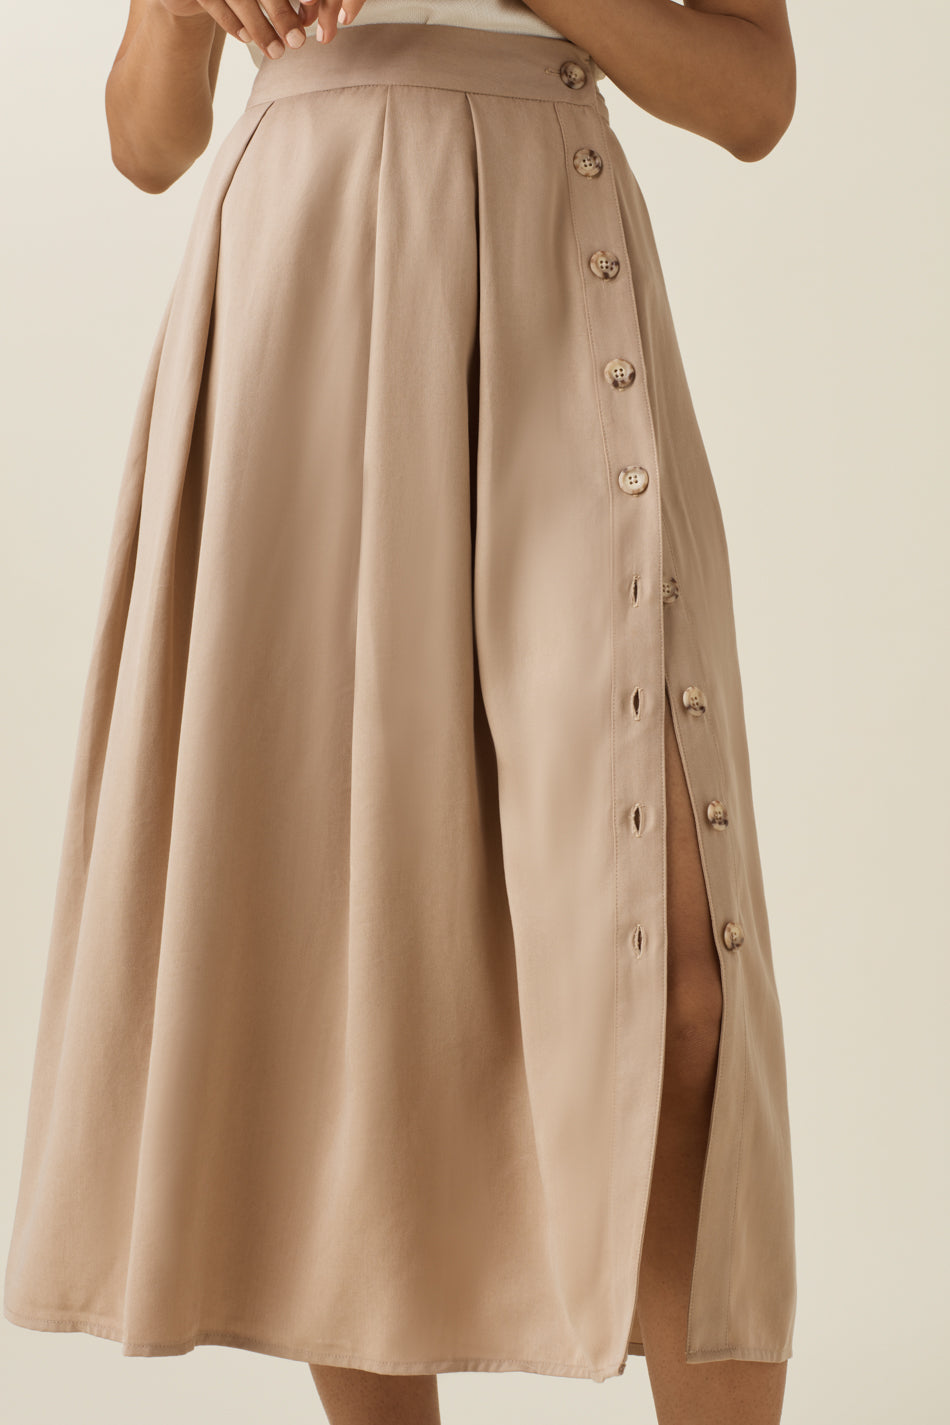 Two Piece Dress, Pleated Midi Circle Skirt, Sleeveless Top Marisa -   Canada